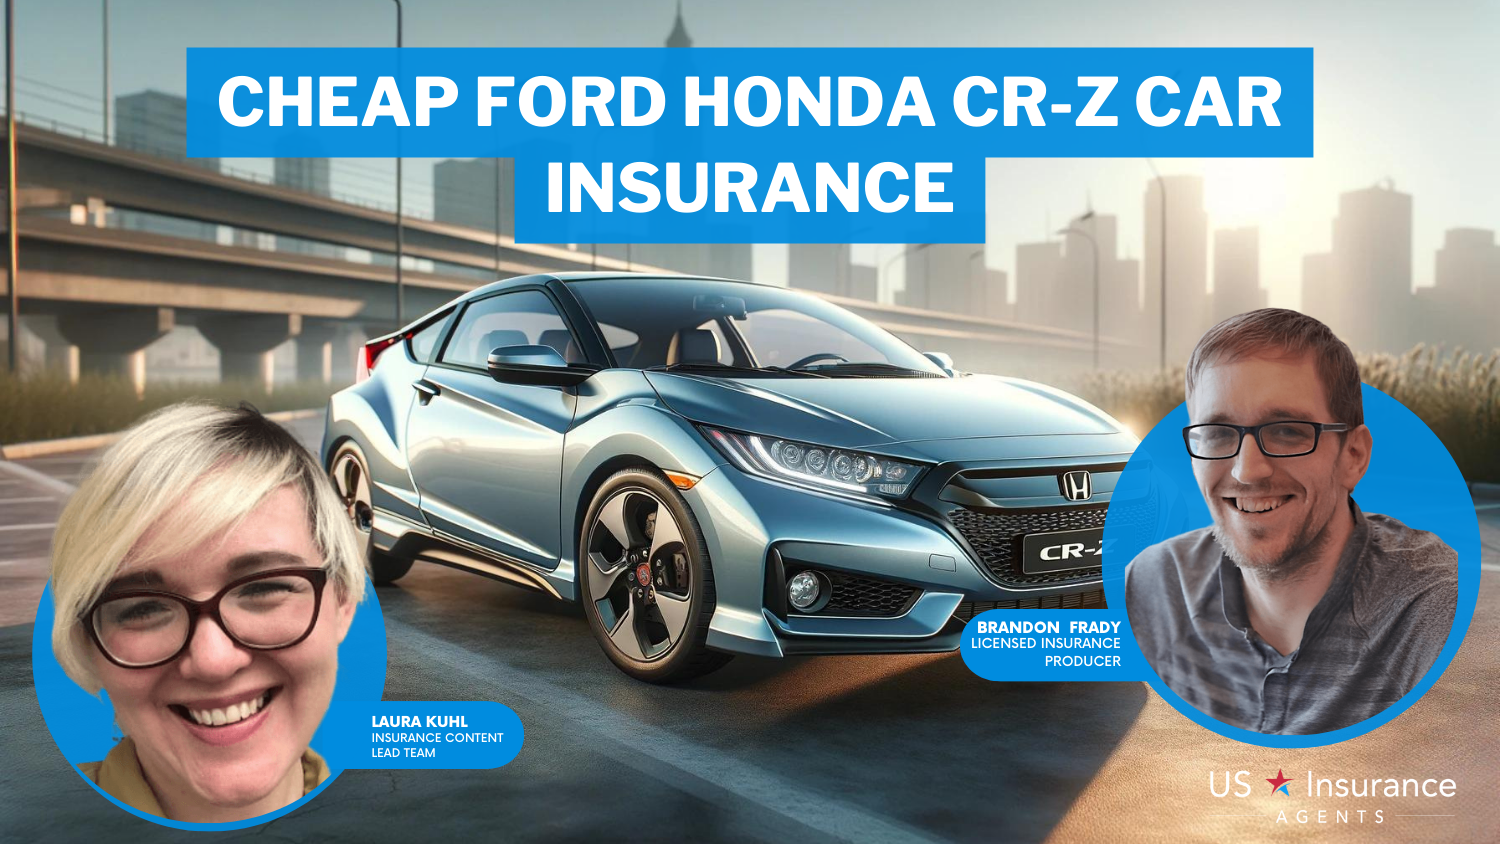 Cheap Honda CR-Z Car Insurance: State Farm, Progressive, and Allstate